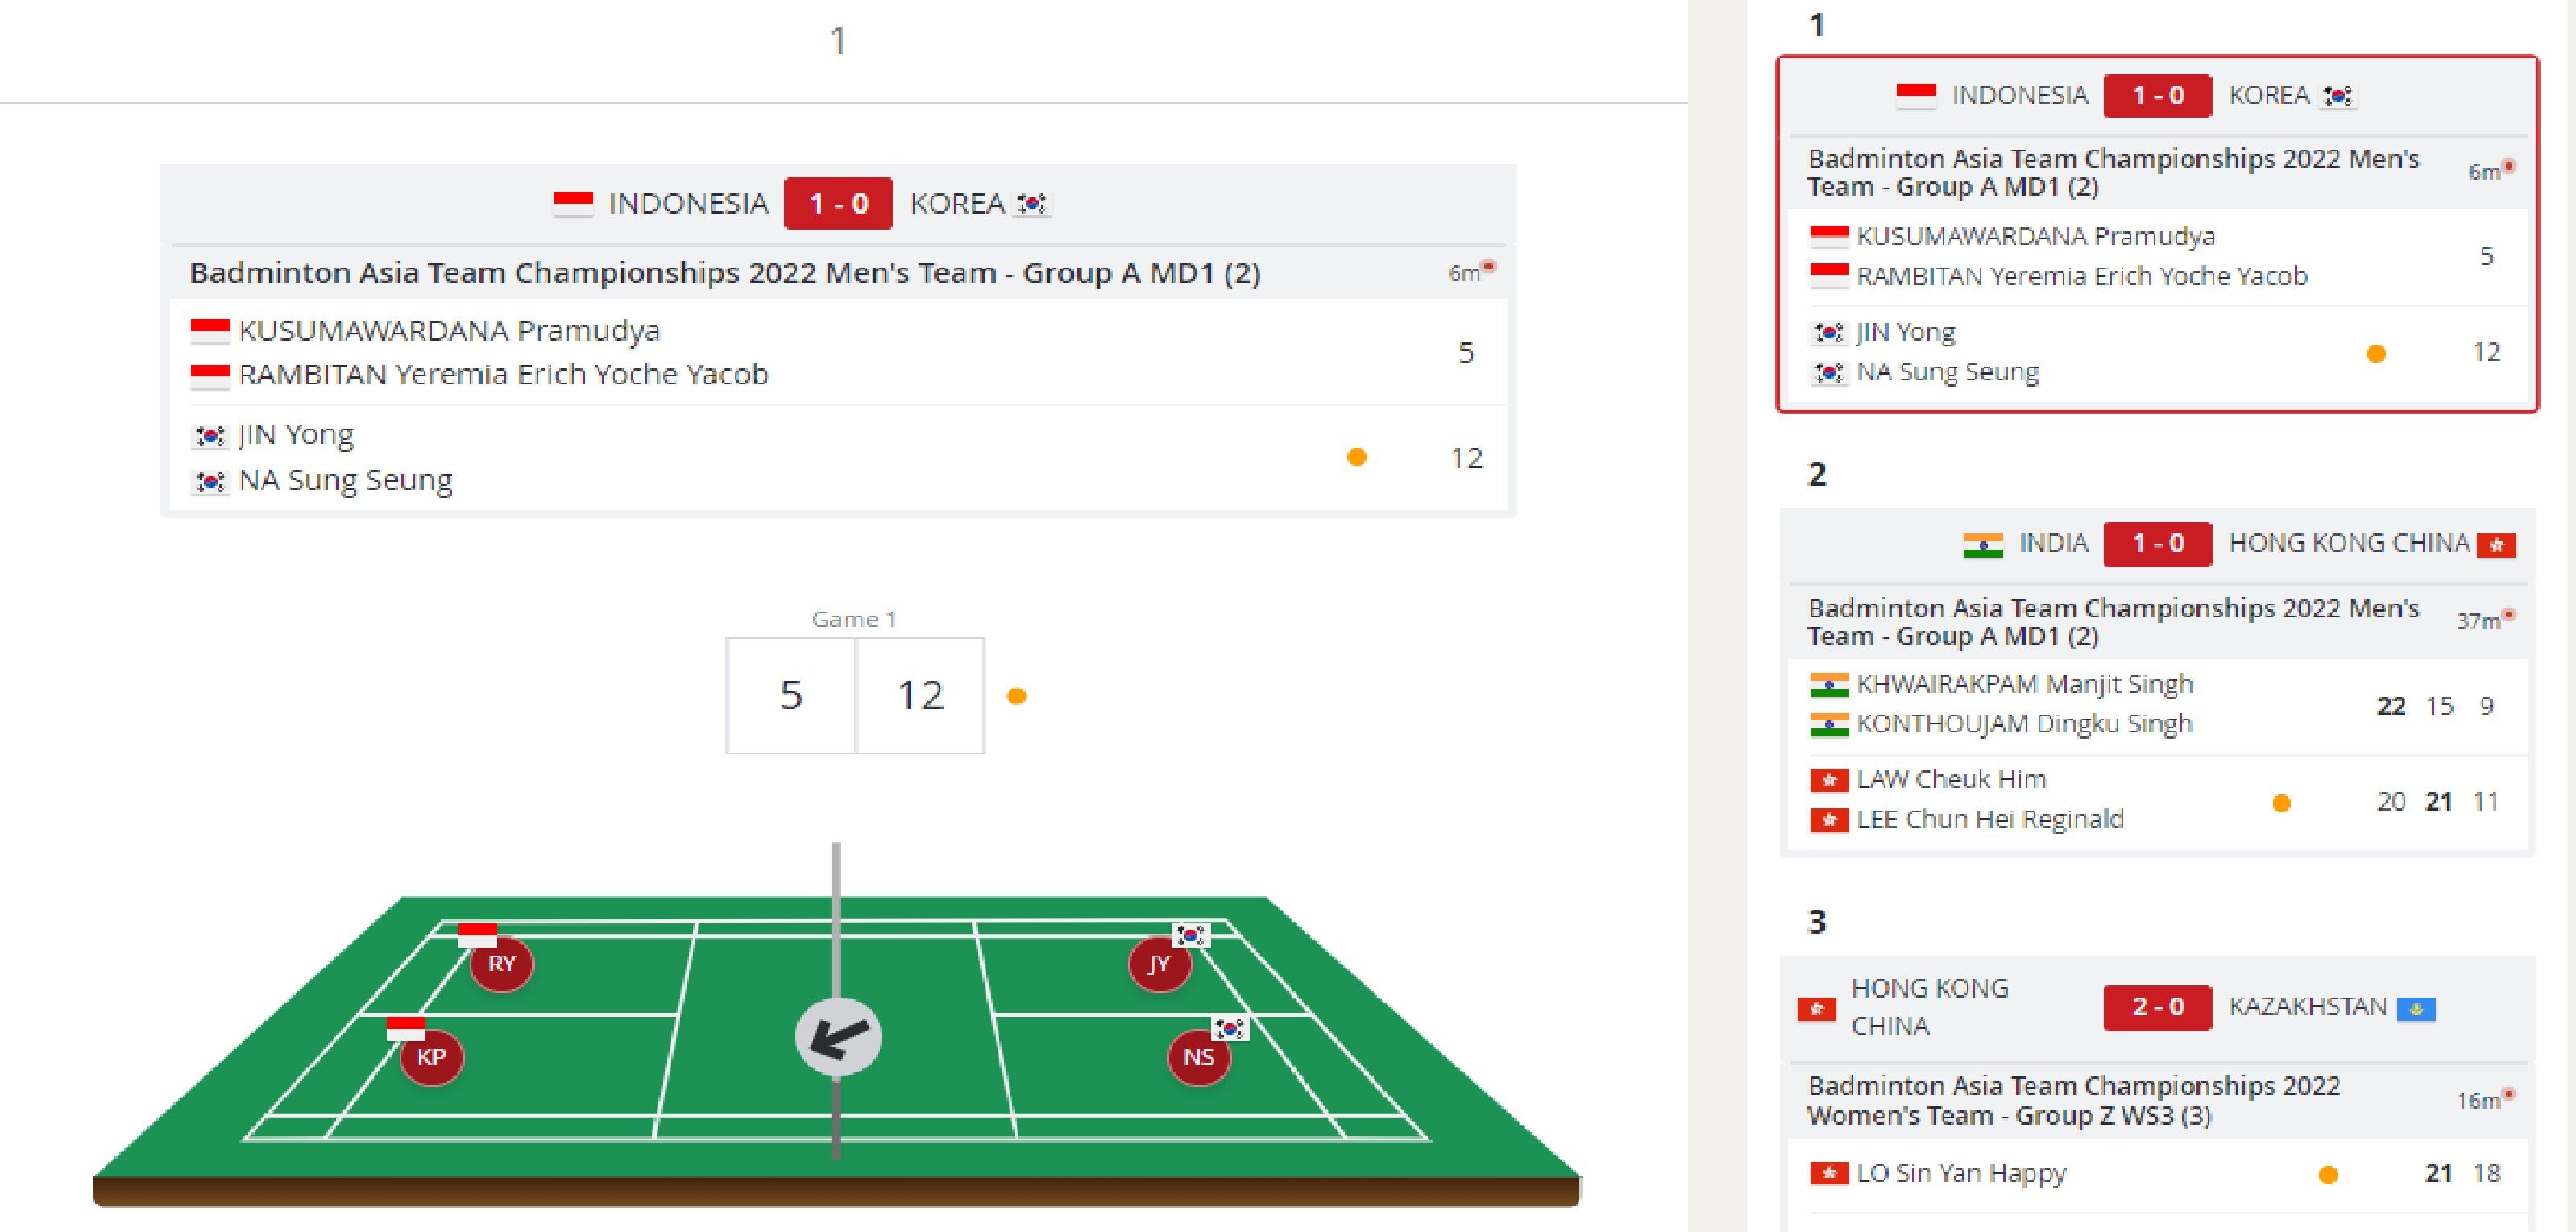 SEDANG BERLANGSUNG Indonesia vs Korea, Badminton Asia Team Championships 2022 Link Live Score